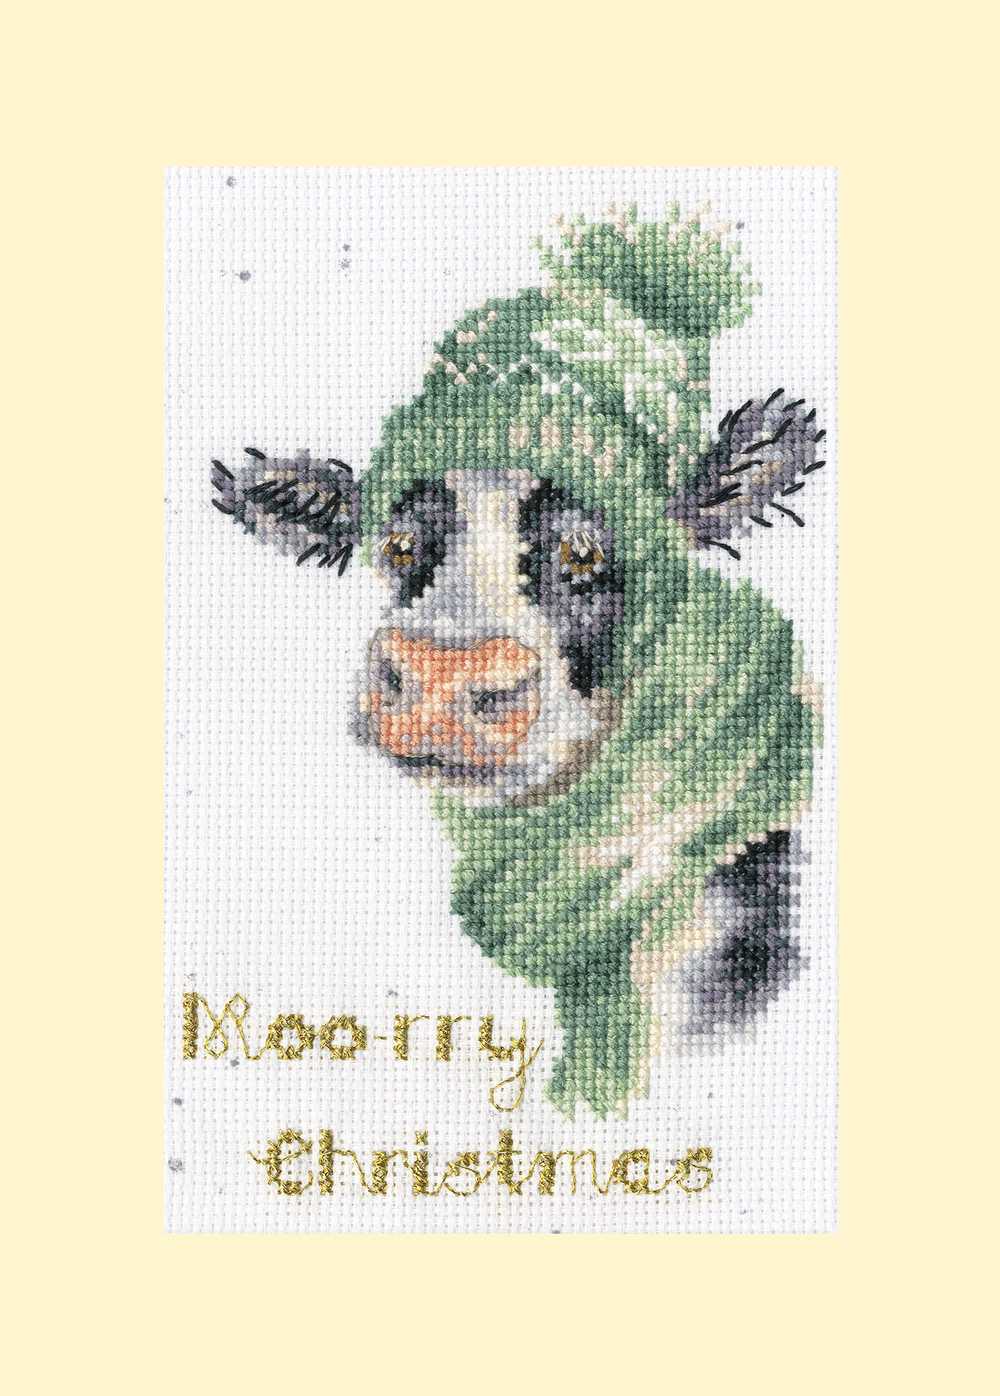 Moo-rry Christmas Cross Stitch Kit - Bothy Threads